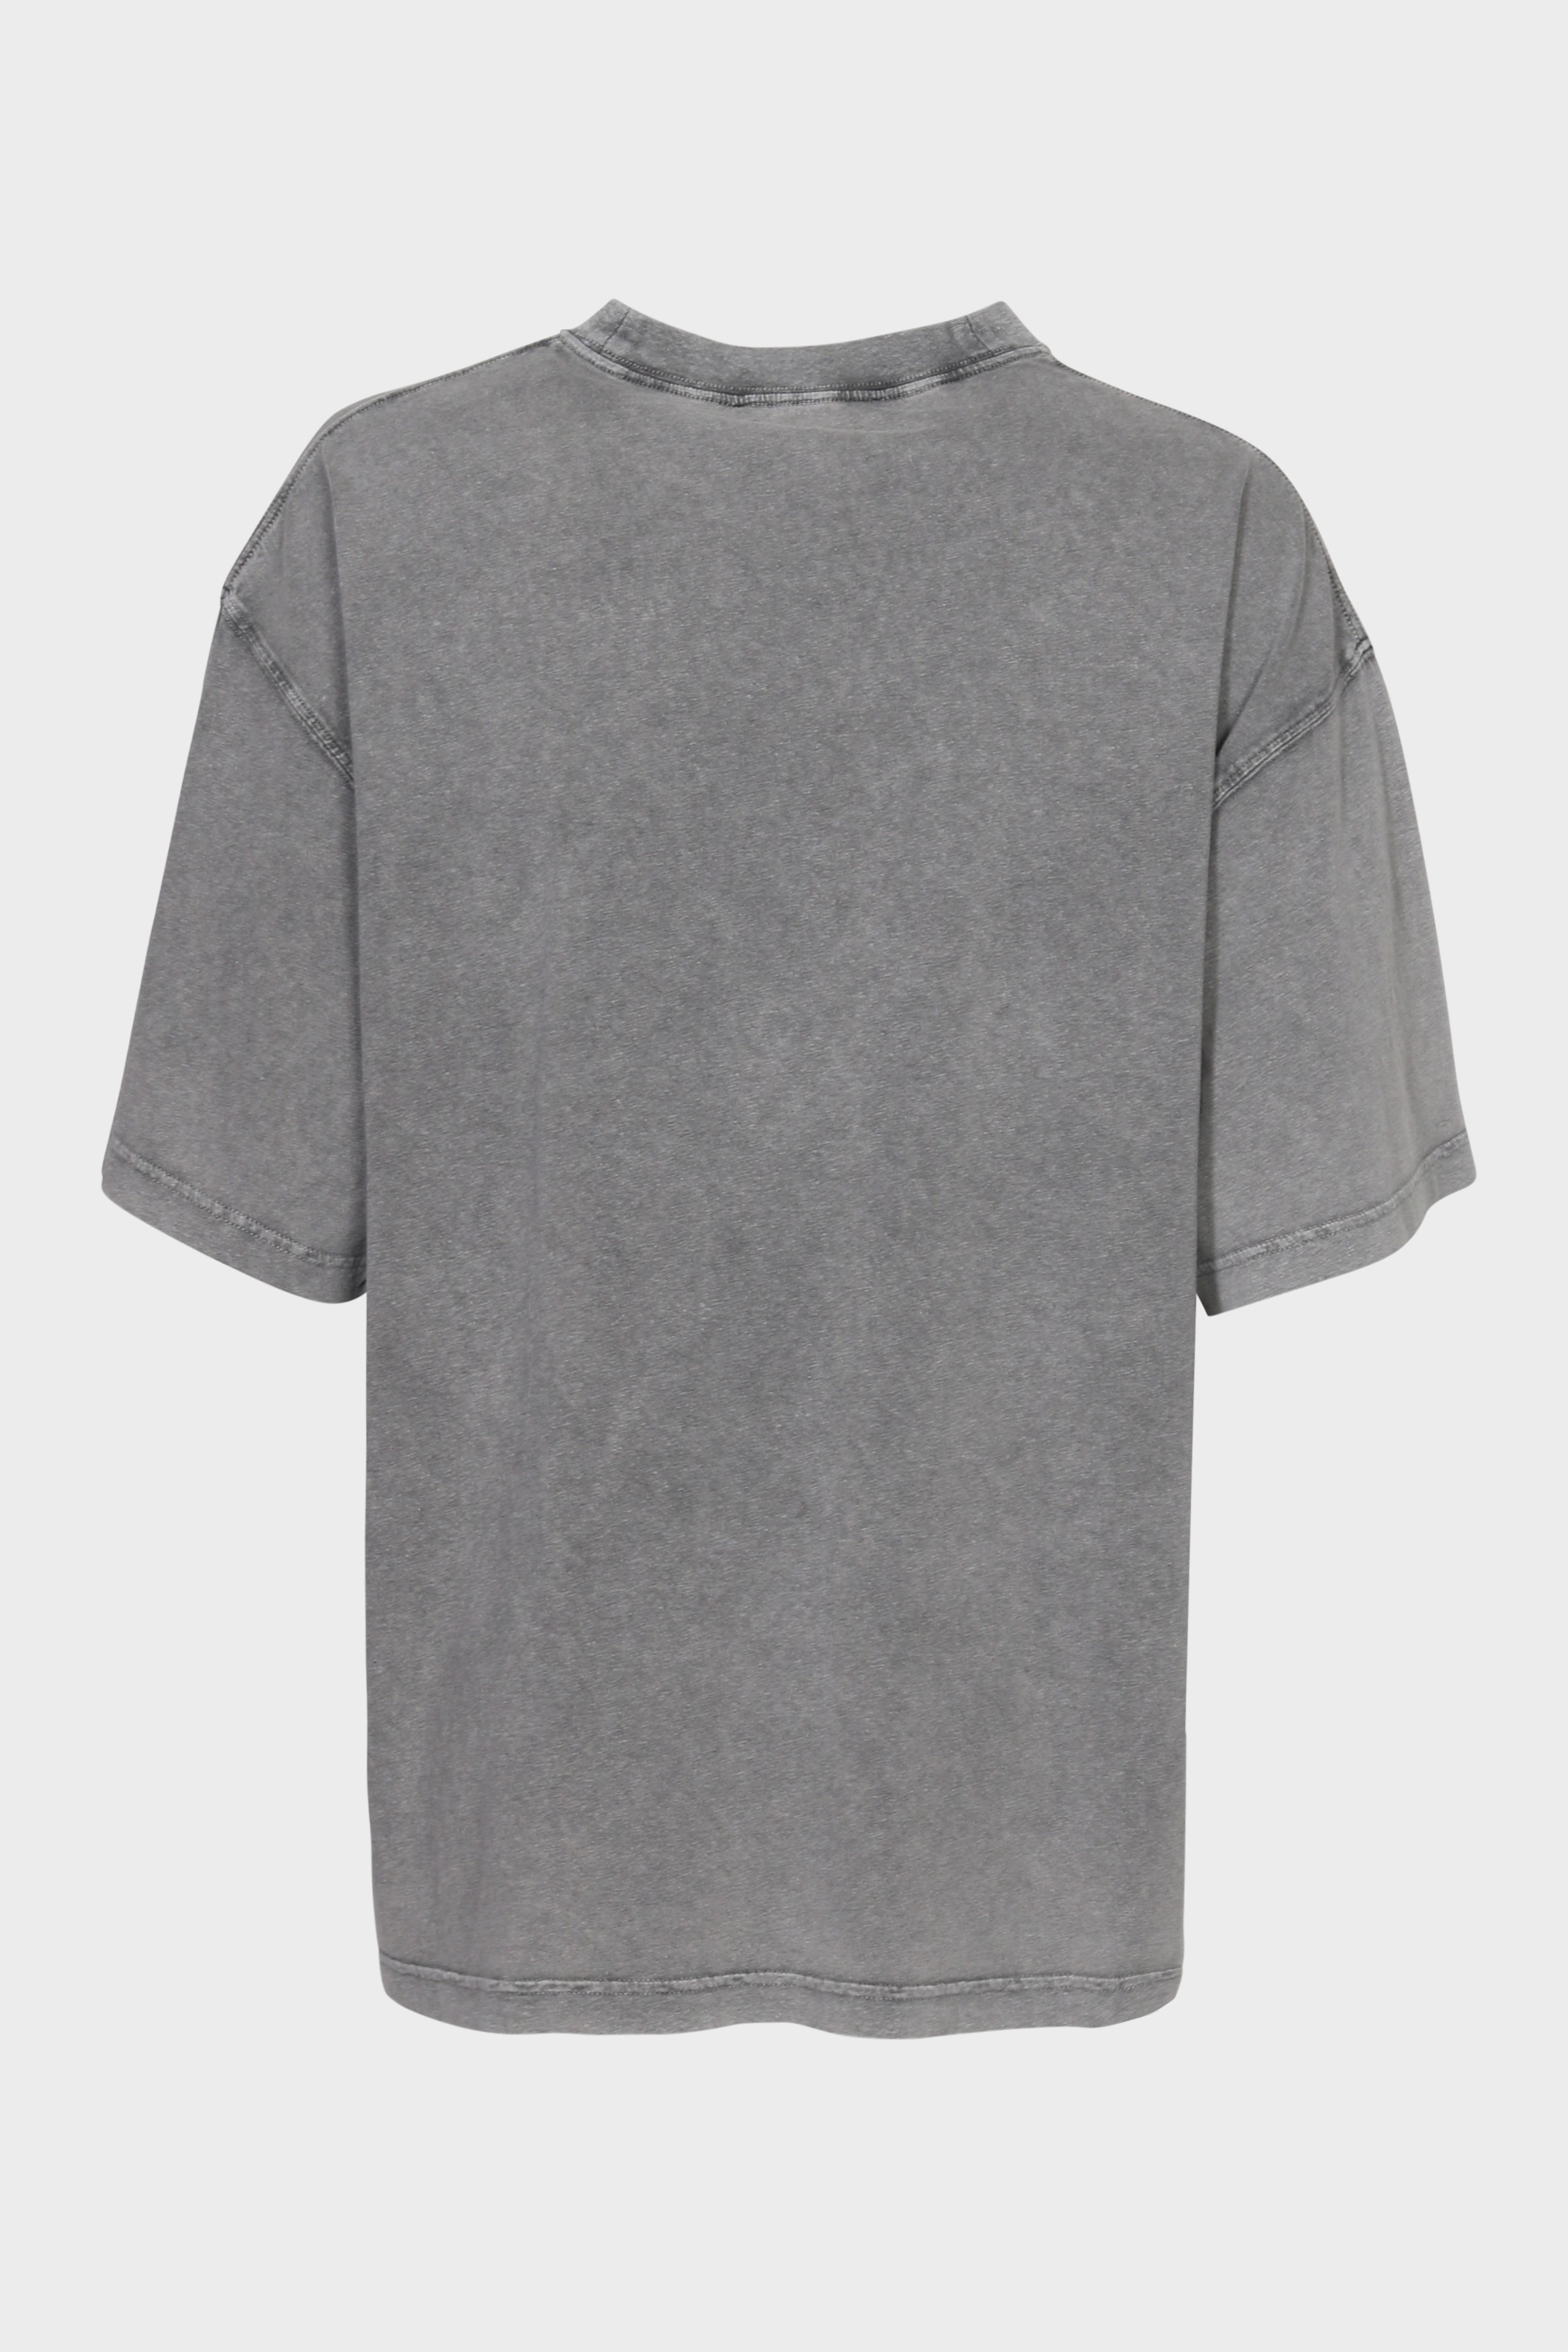 ACNE STUDIOS Logo T-Shirt in Faded Grey L